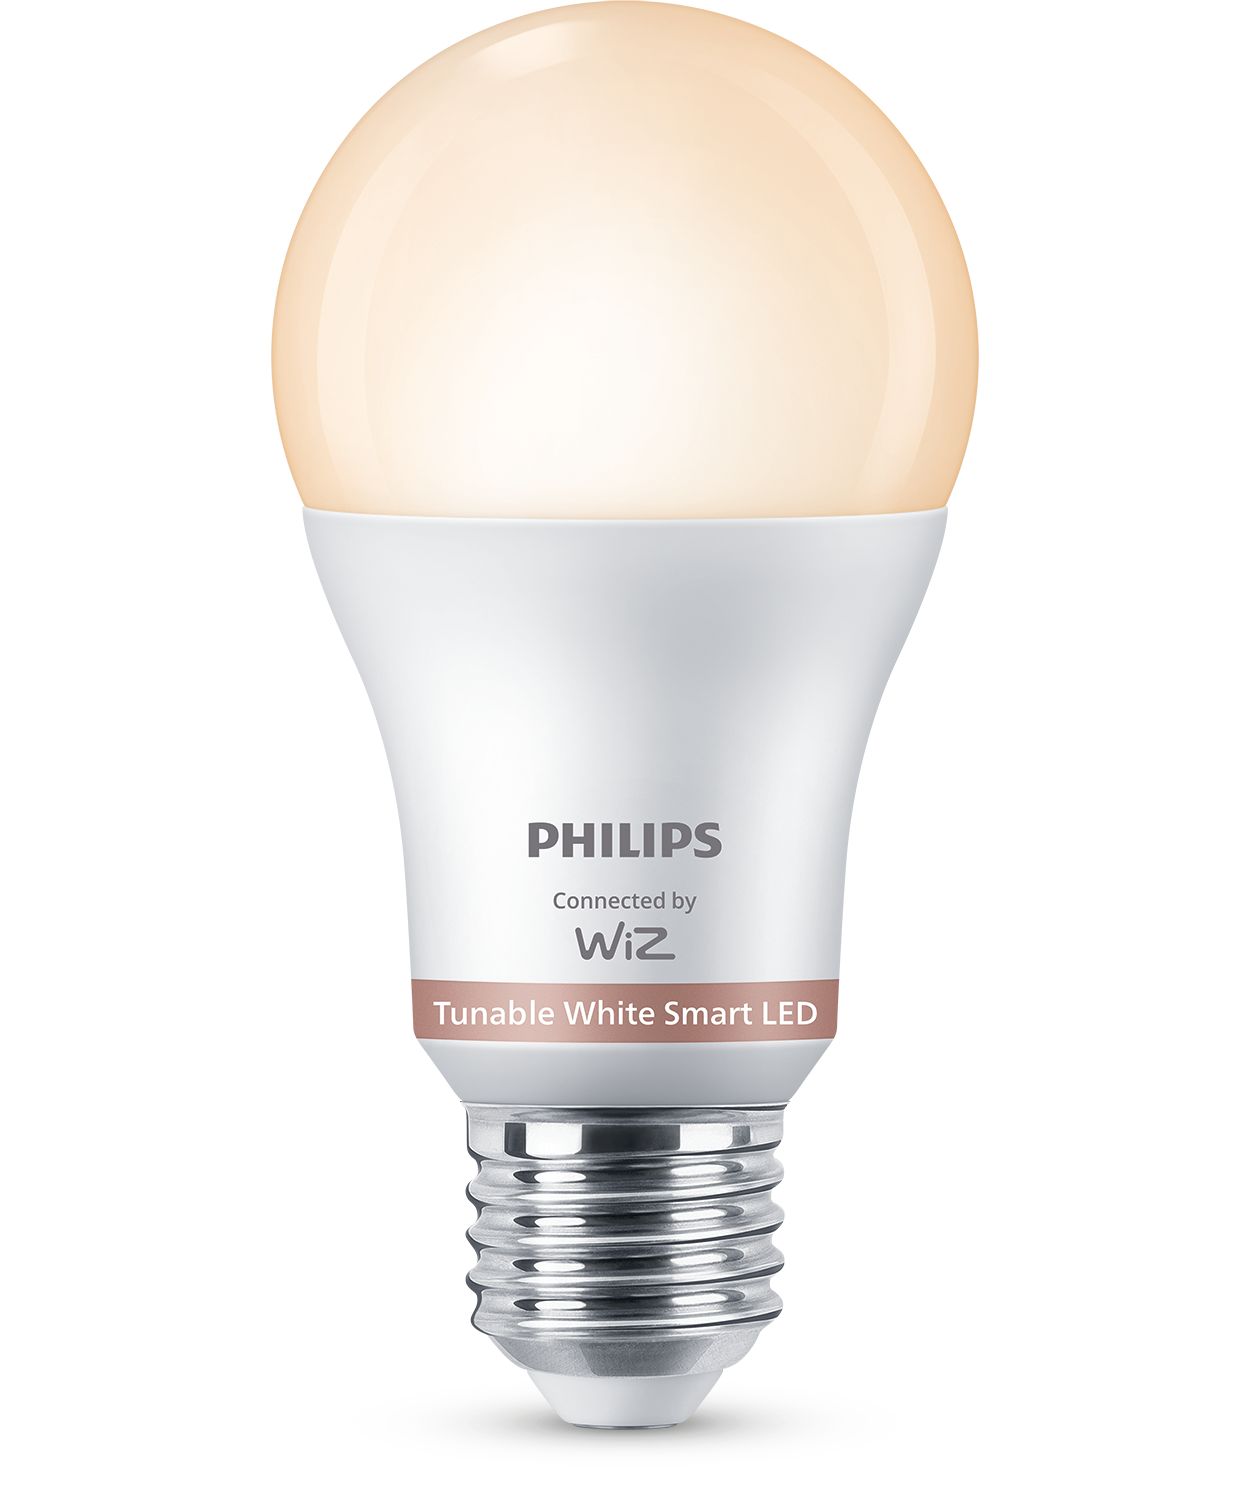 Aan de overkant wenkbrauw Temmen Slimme LED Lamp 60W A60 E27 x3 8720169210394 | Philips